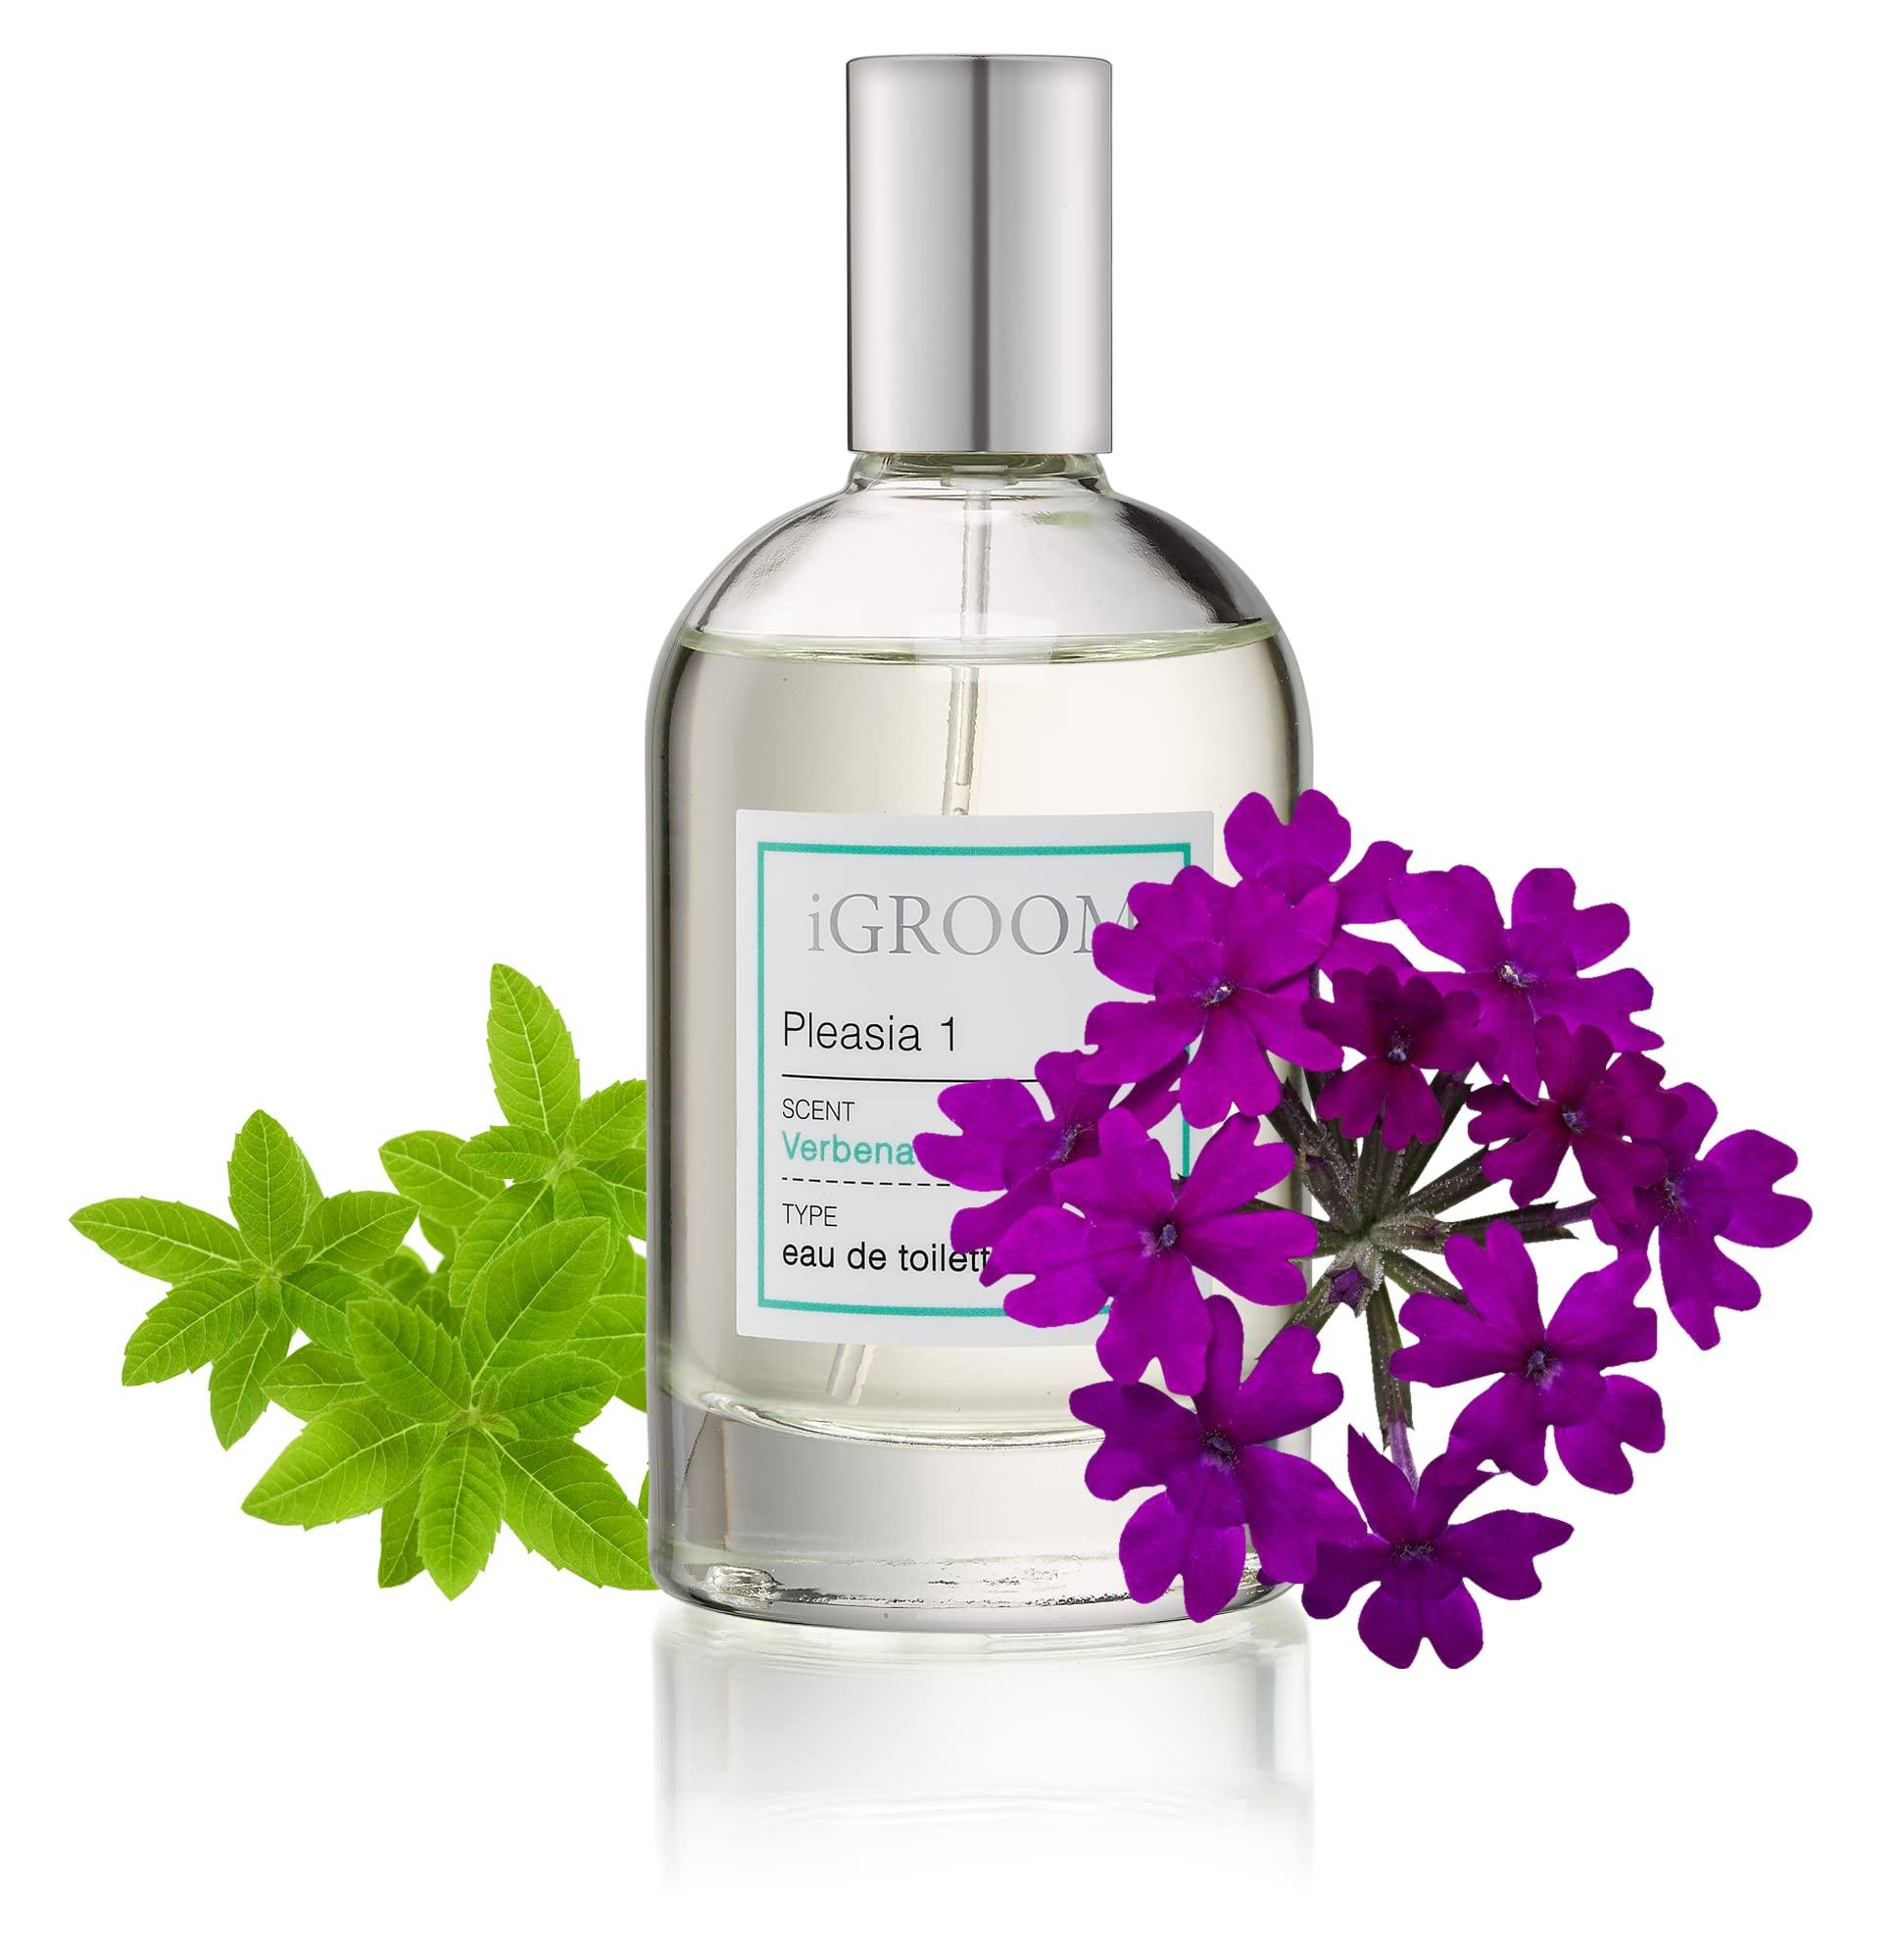 iGroom Pet Perfume Pleasia 1, Luxury Pet Beauty Care, Verbena Scent, Long Lasting, Made in USA, 100 ml